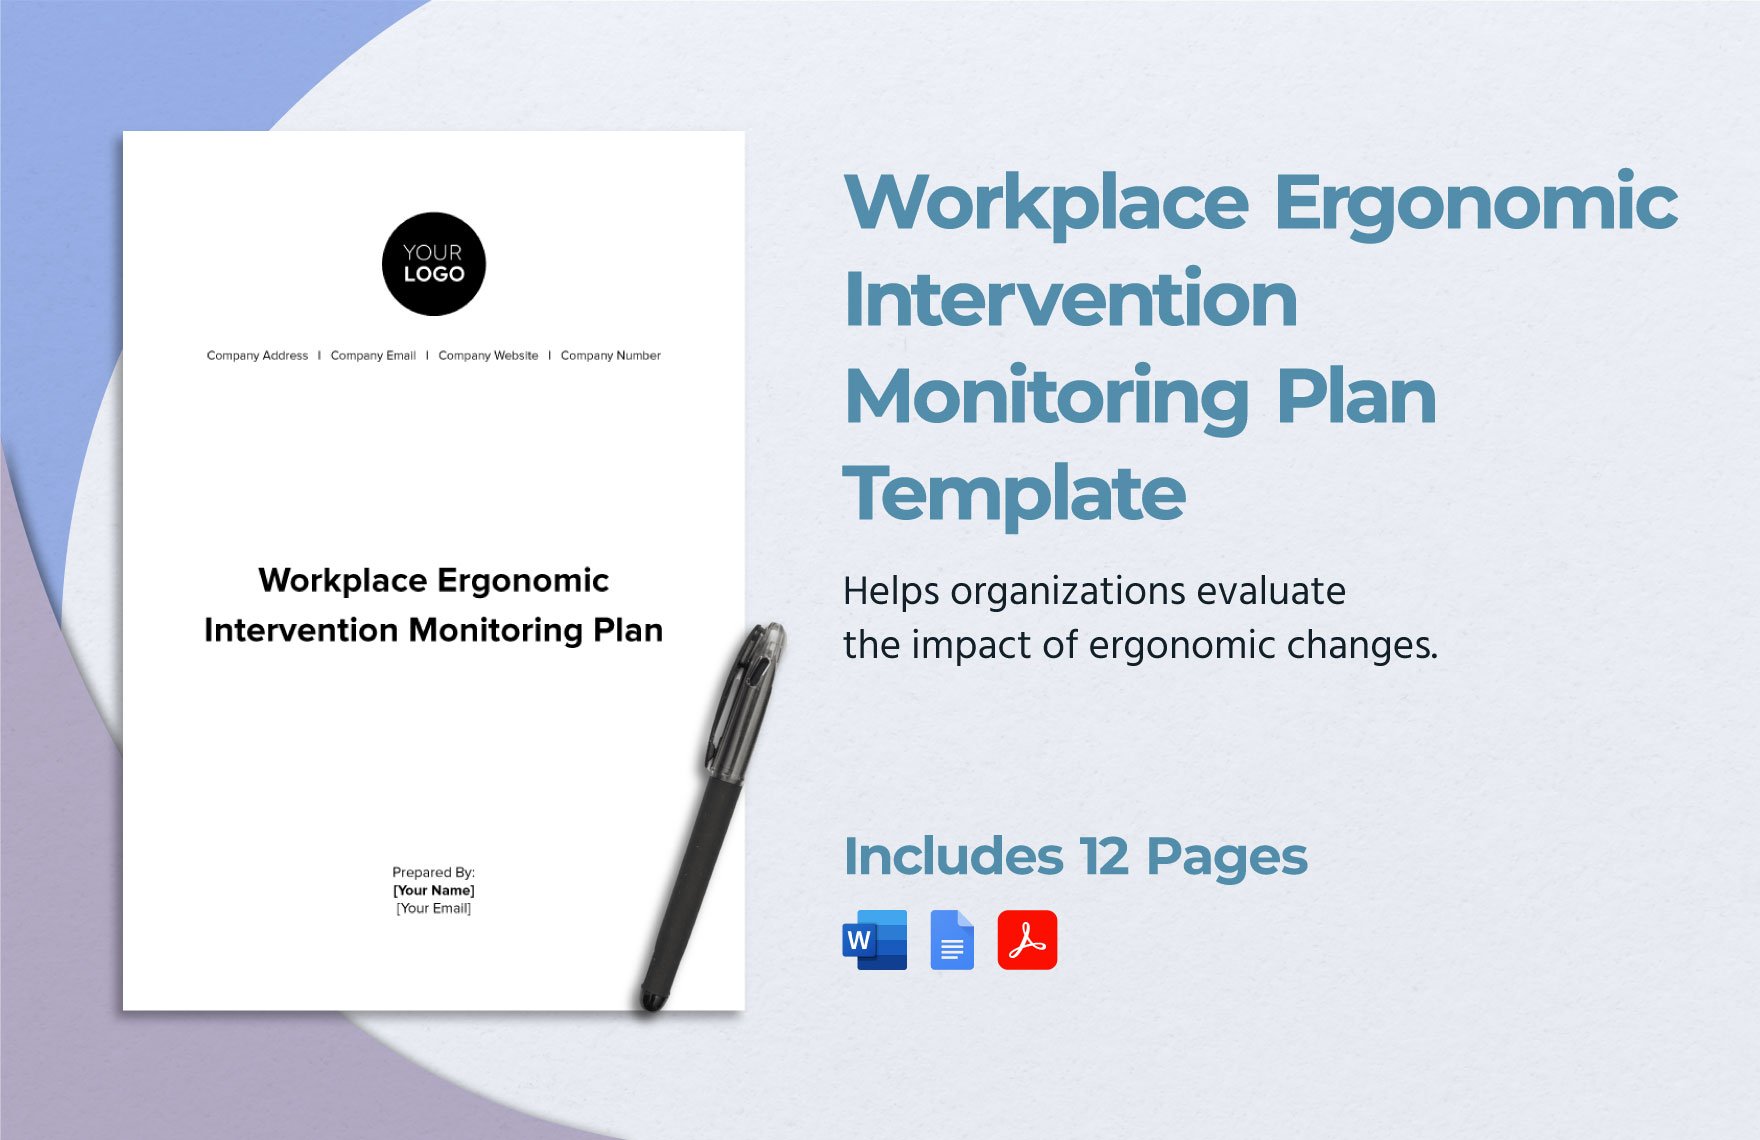 Workplace Ergonomic Intervention Monitoring Plan Template